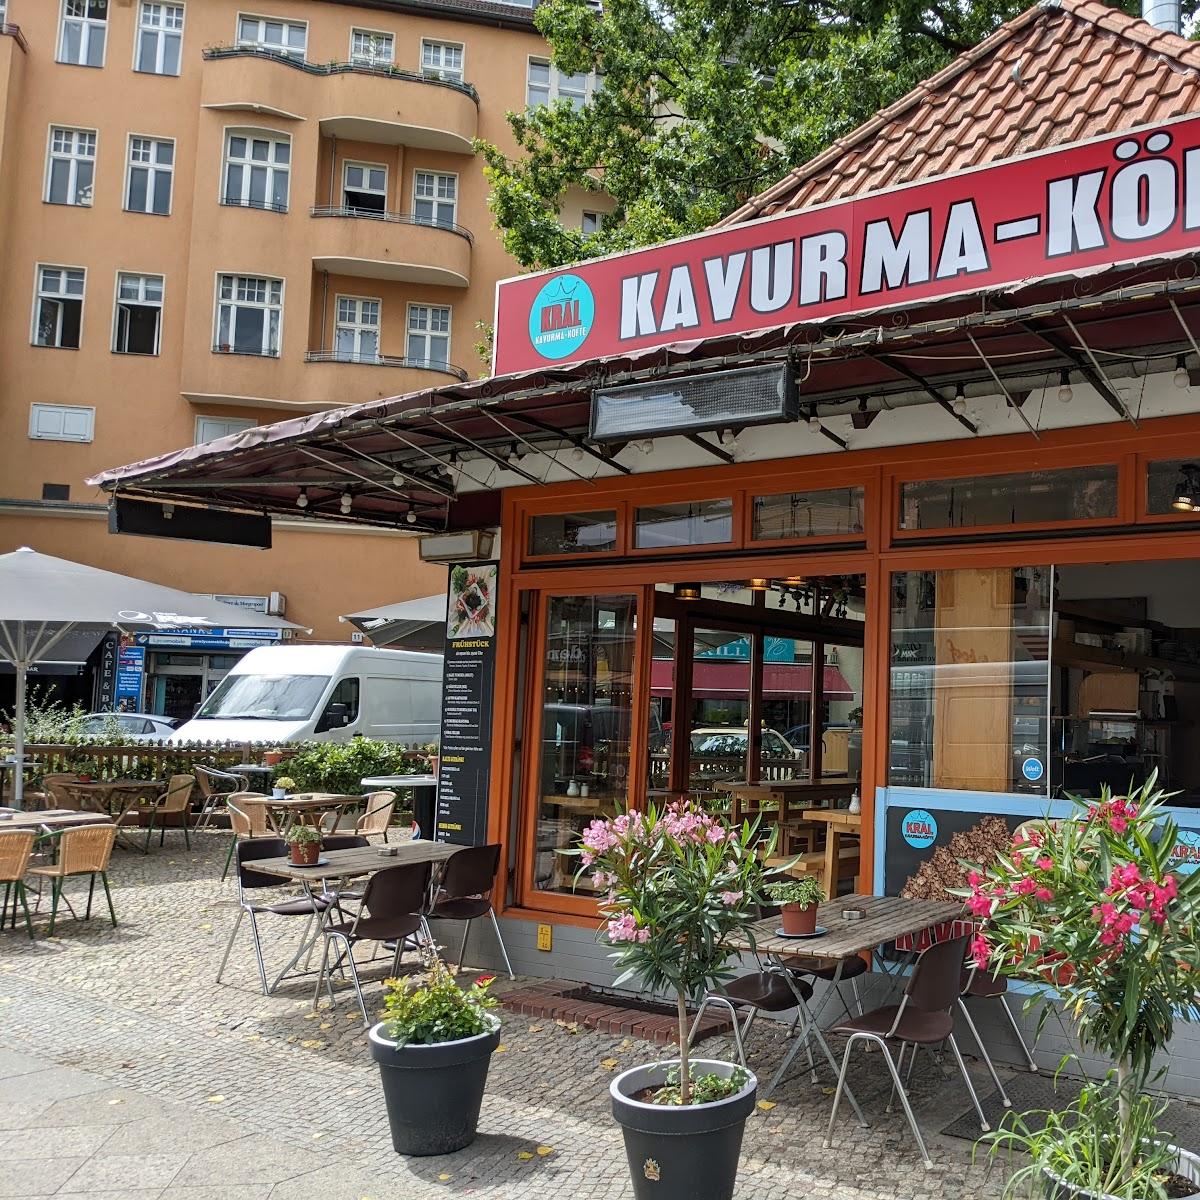 Restaurant "Kral Kavurma-Köfte" in Berlin